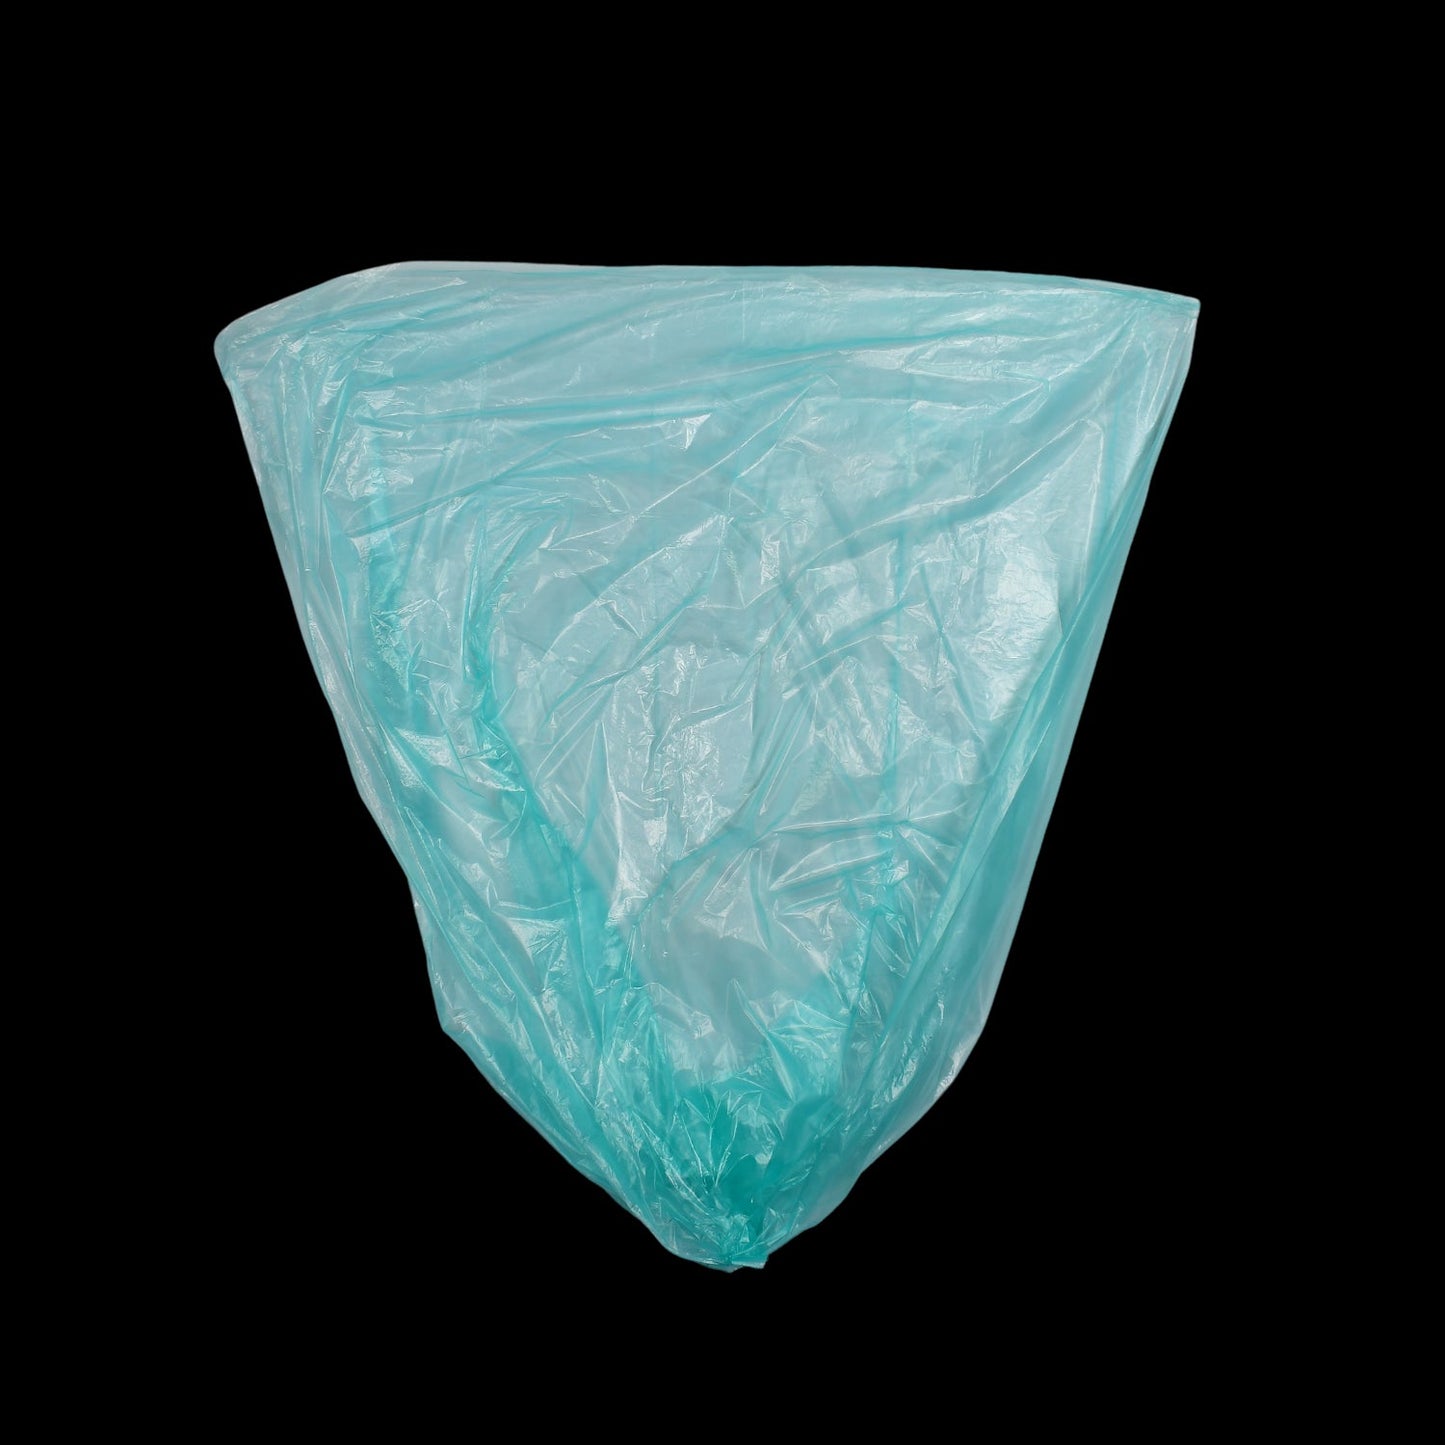 9225 1Roll Garbage Bags/Dustbin Bags/Trash Bags 45x50cm DeoDap